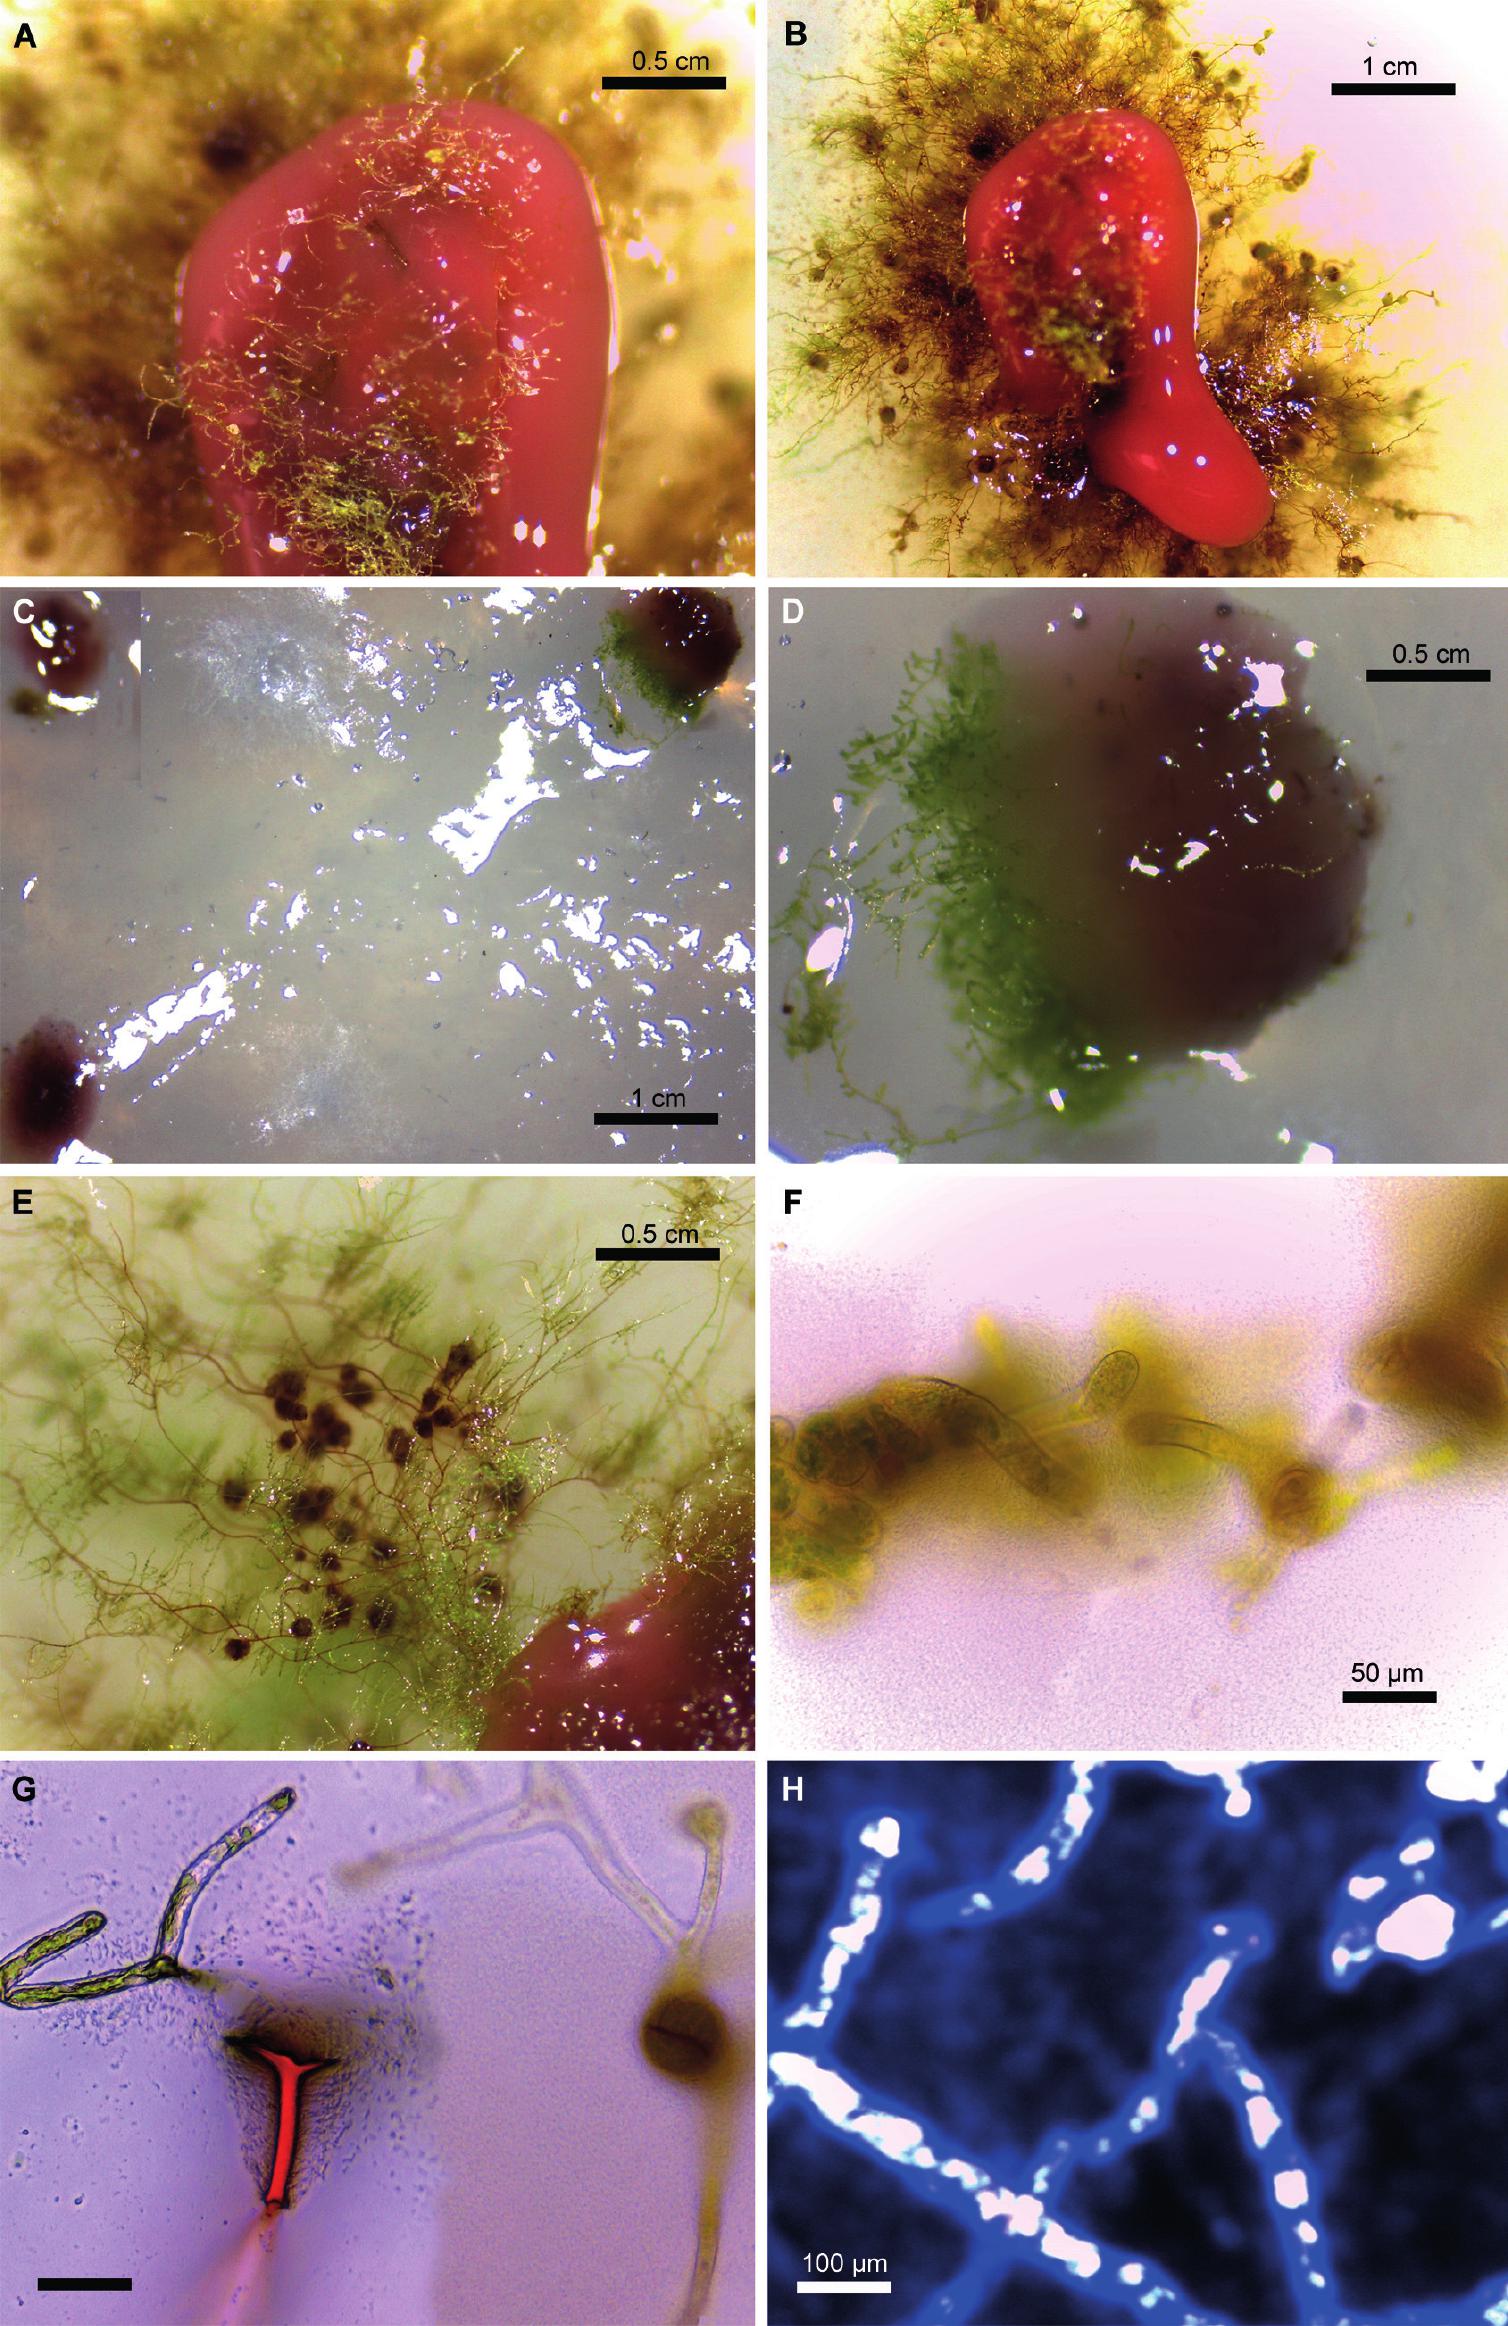 https://bioone.org/journals/annales-botanici-fennici/volume-59/issue-1/085.059.0118/Endophytic-Methylobacterium-in-Tissue-Culture-of-the-Moss-Didymodon-tectorum/10.5735/085.059.0118.full